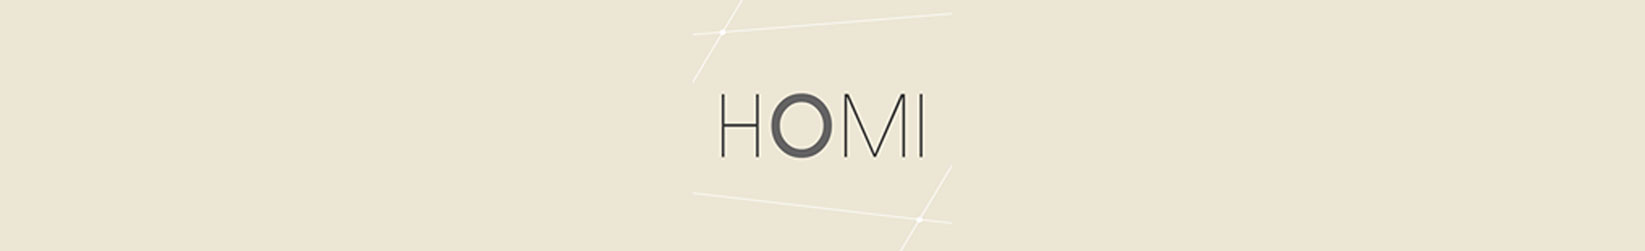 HOMI Milano 2014 | Italian Goodies Collection